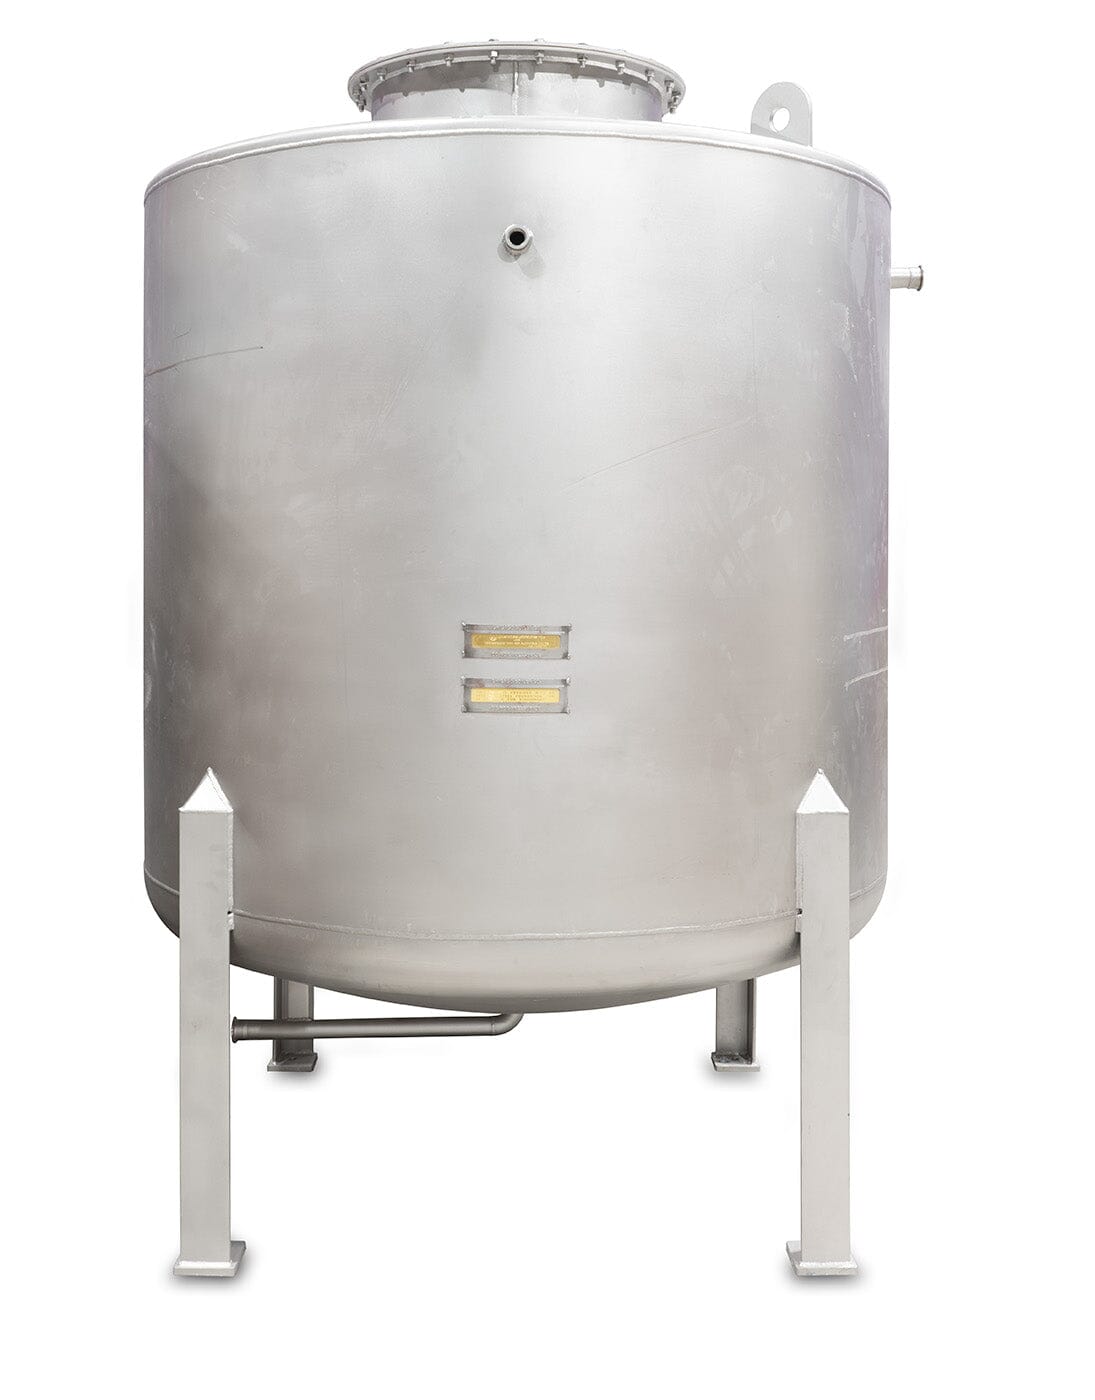 CB MILLS, 1000 Gallon Stainless Steel UL Listed (UL-142) Ethanol Storage Tank